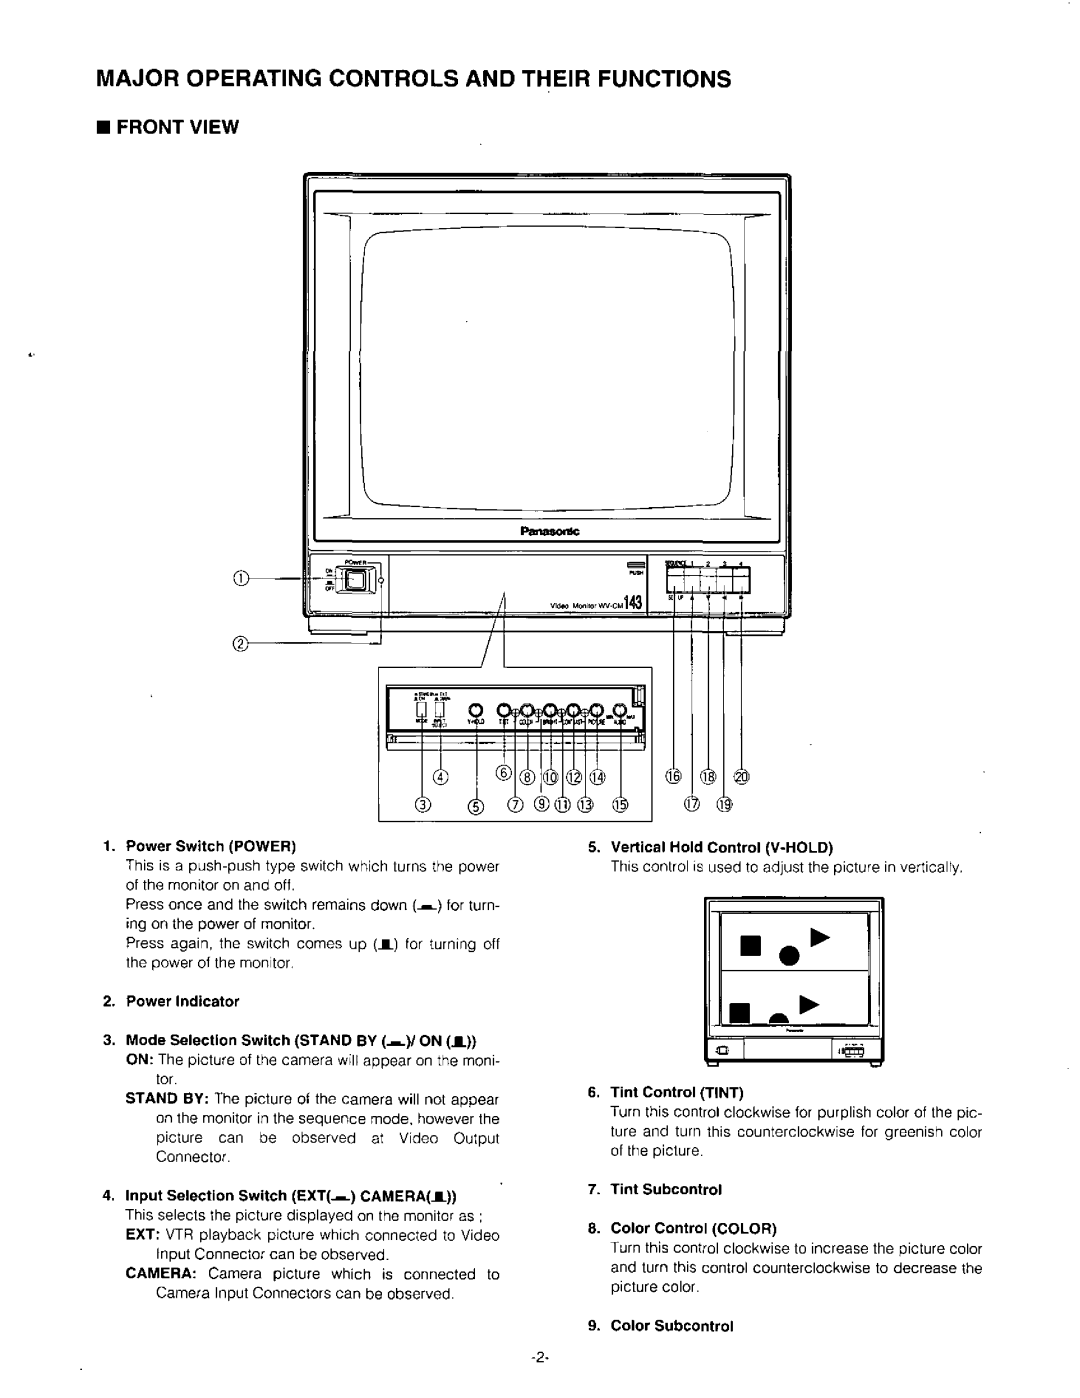 Panasonic WV-CM143 manual 